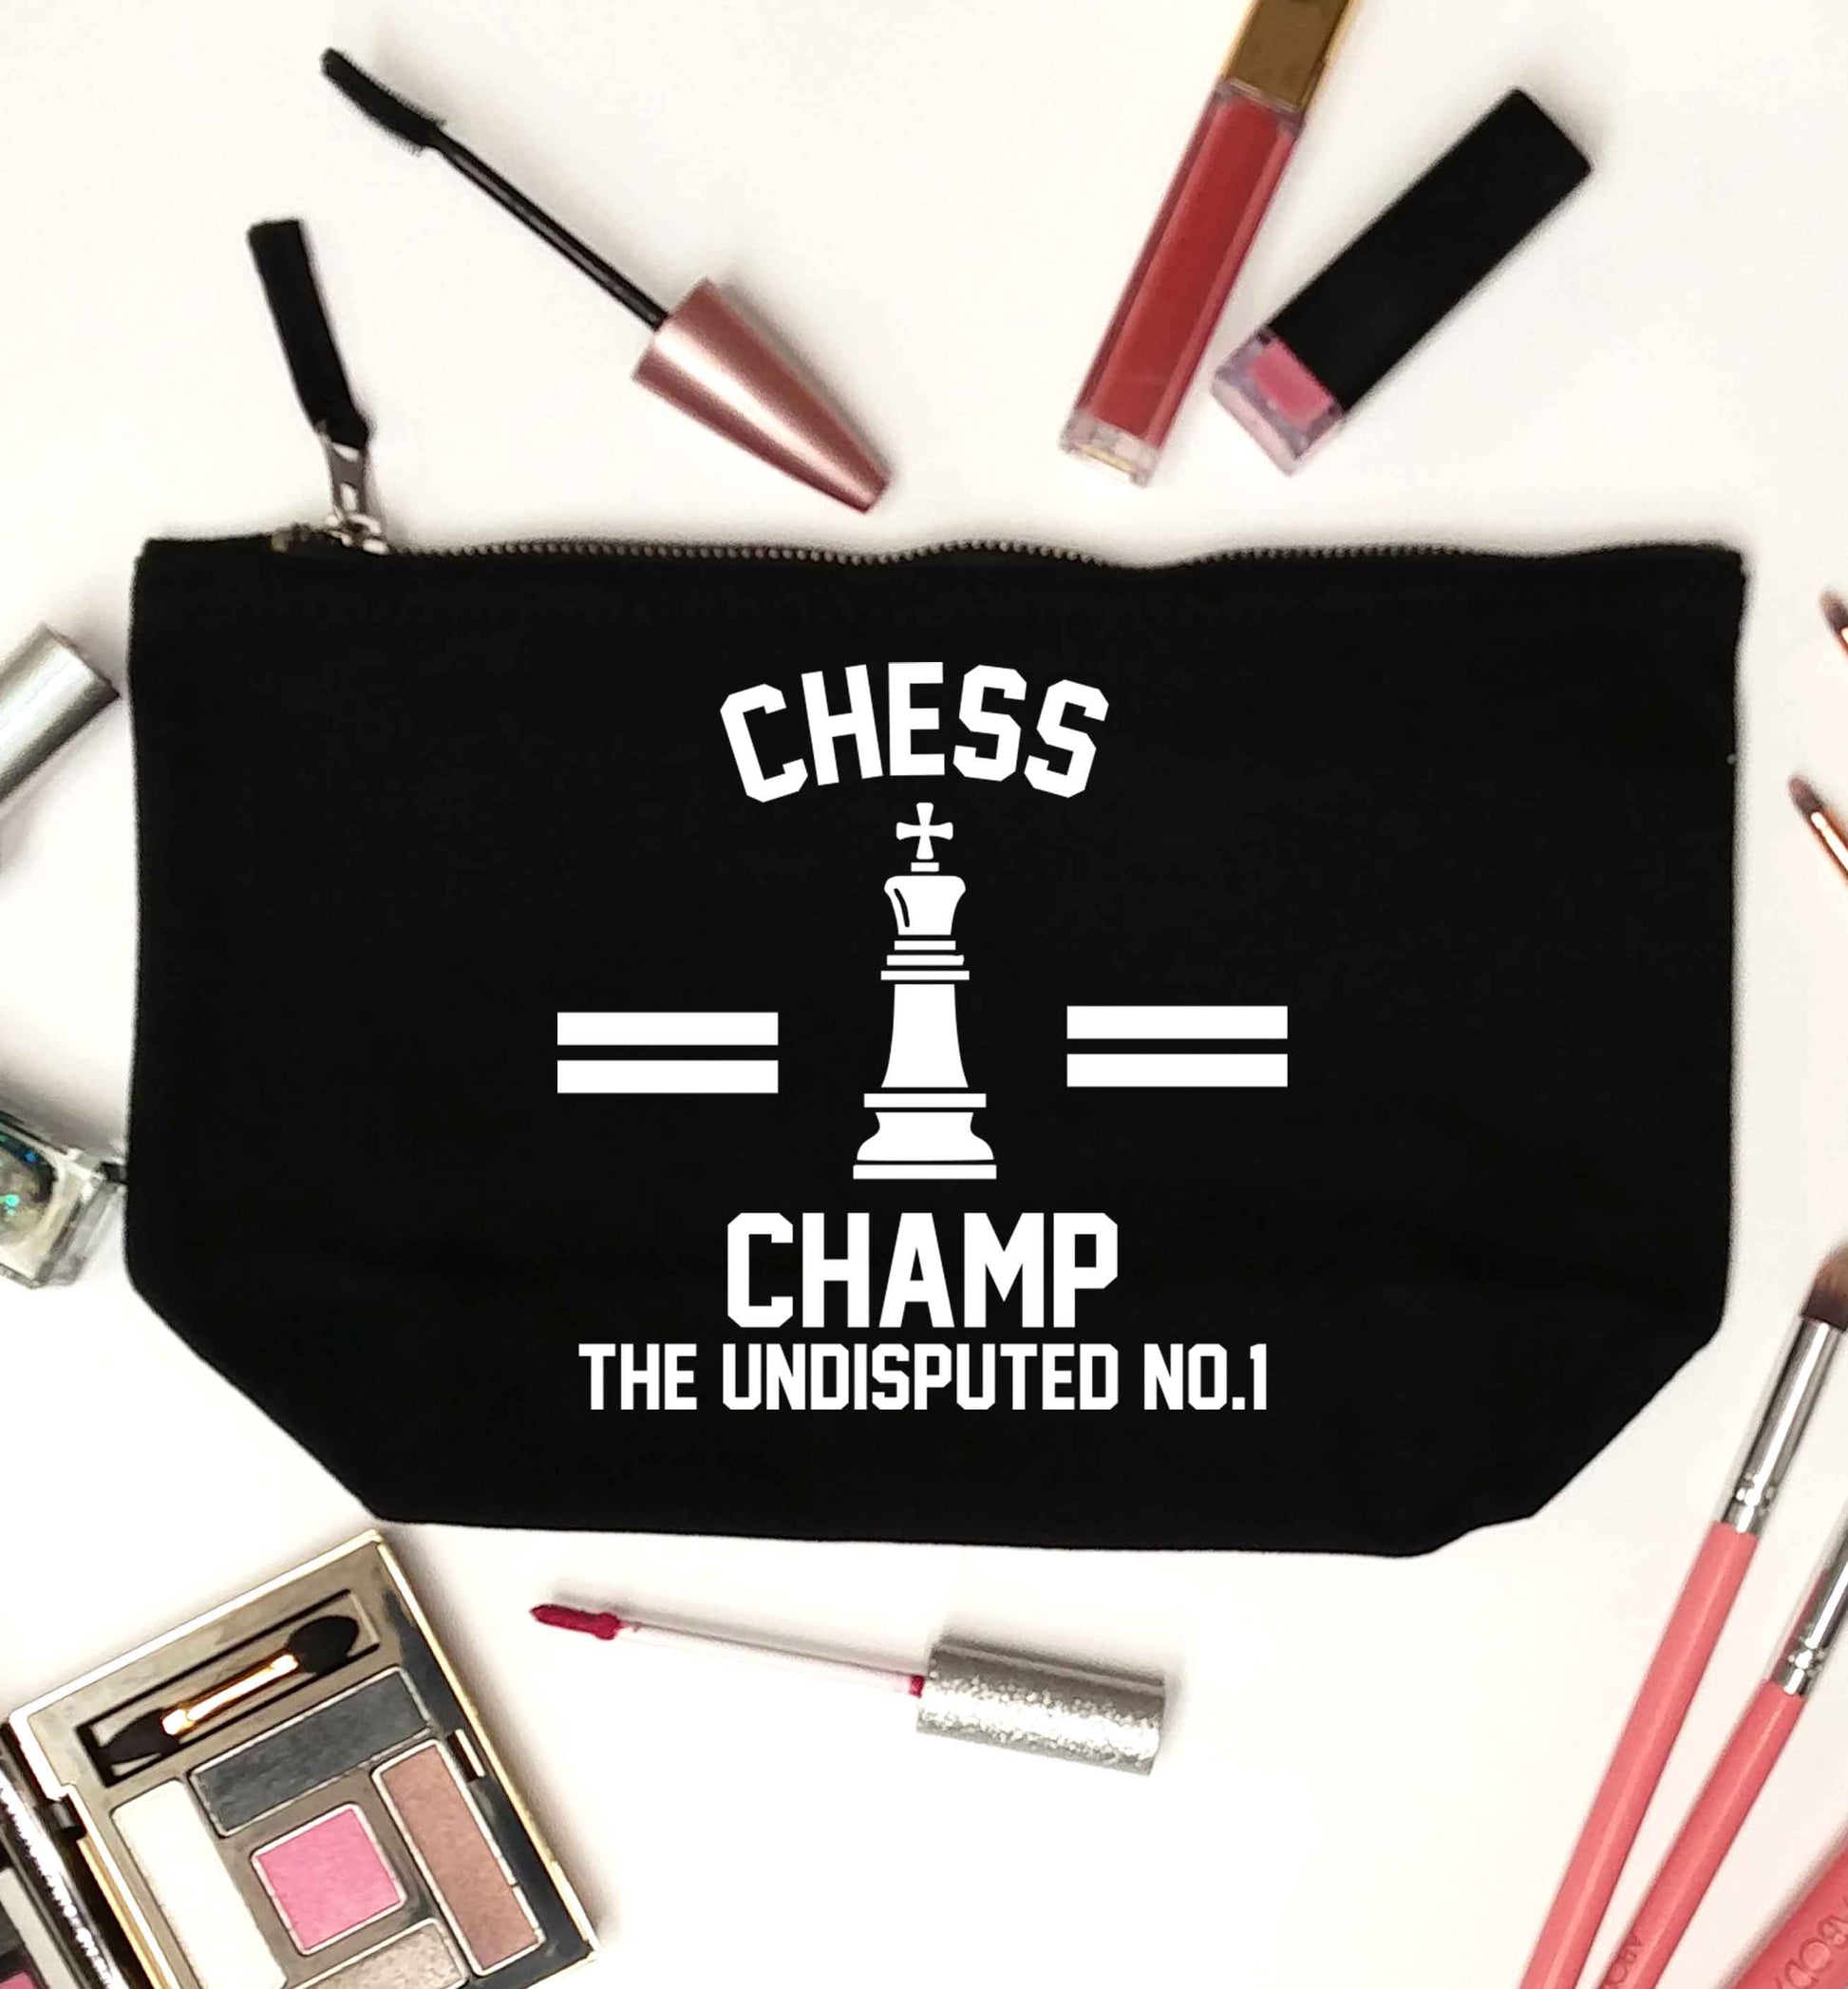 Undisputed chess championship no.1  black makeup bag